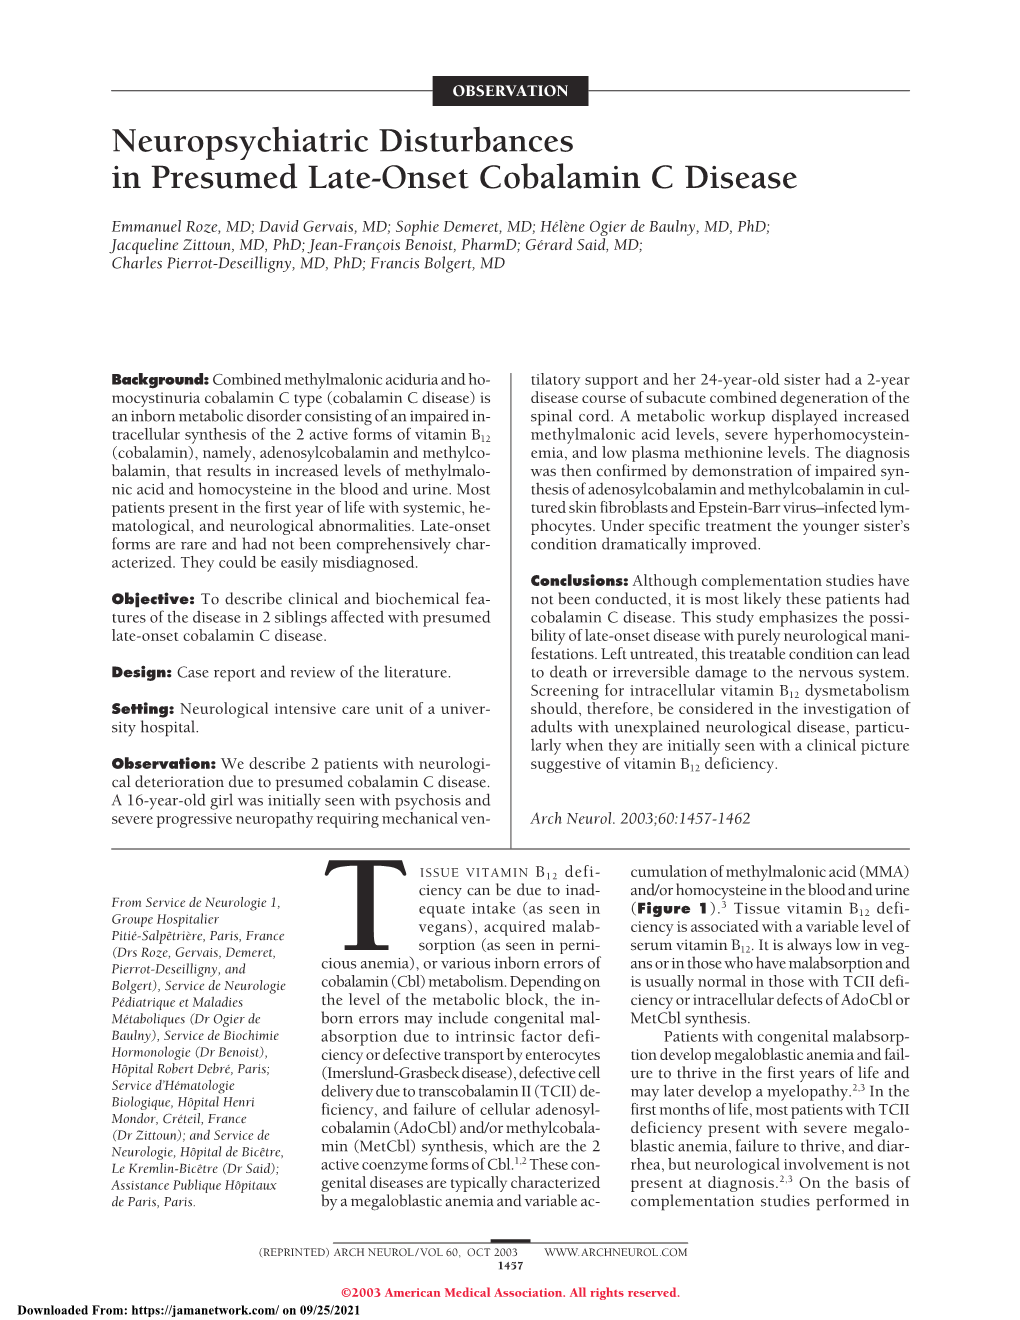 Neuropsychiatric Disturbances in Presumed Late-Onset Cobalamin C Disease